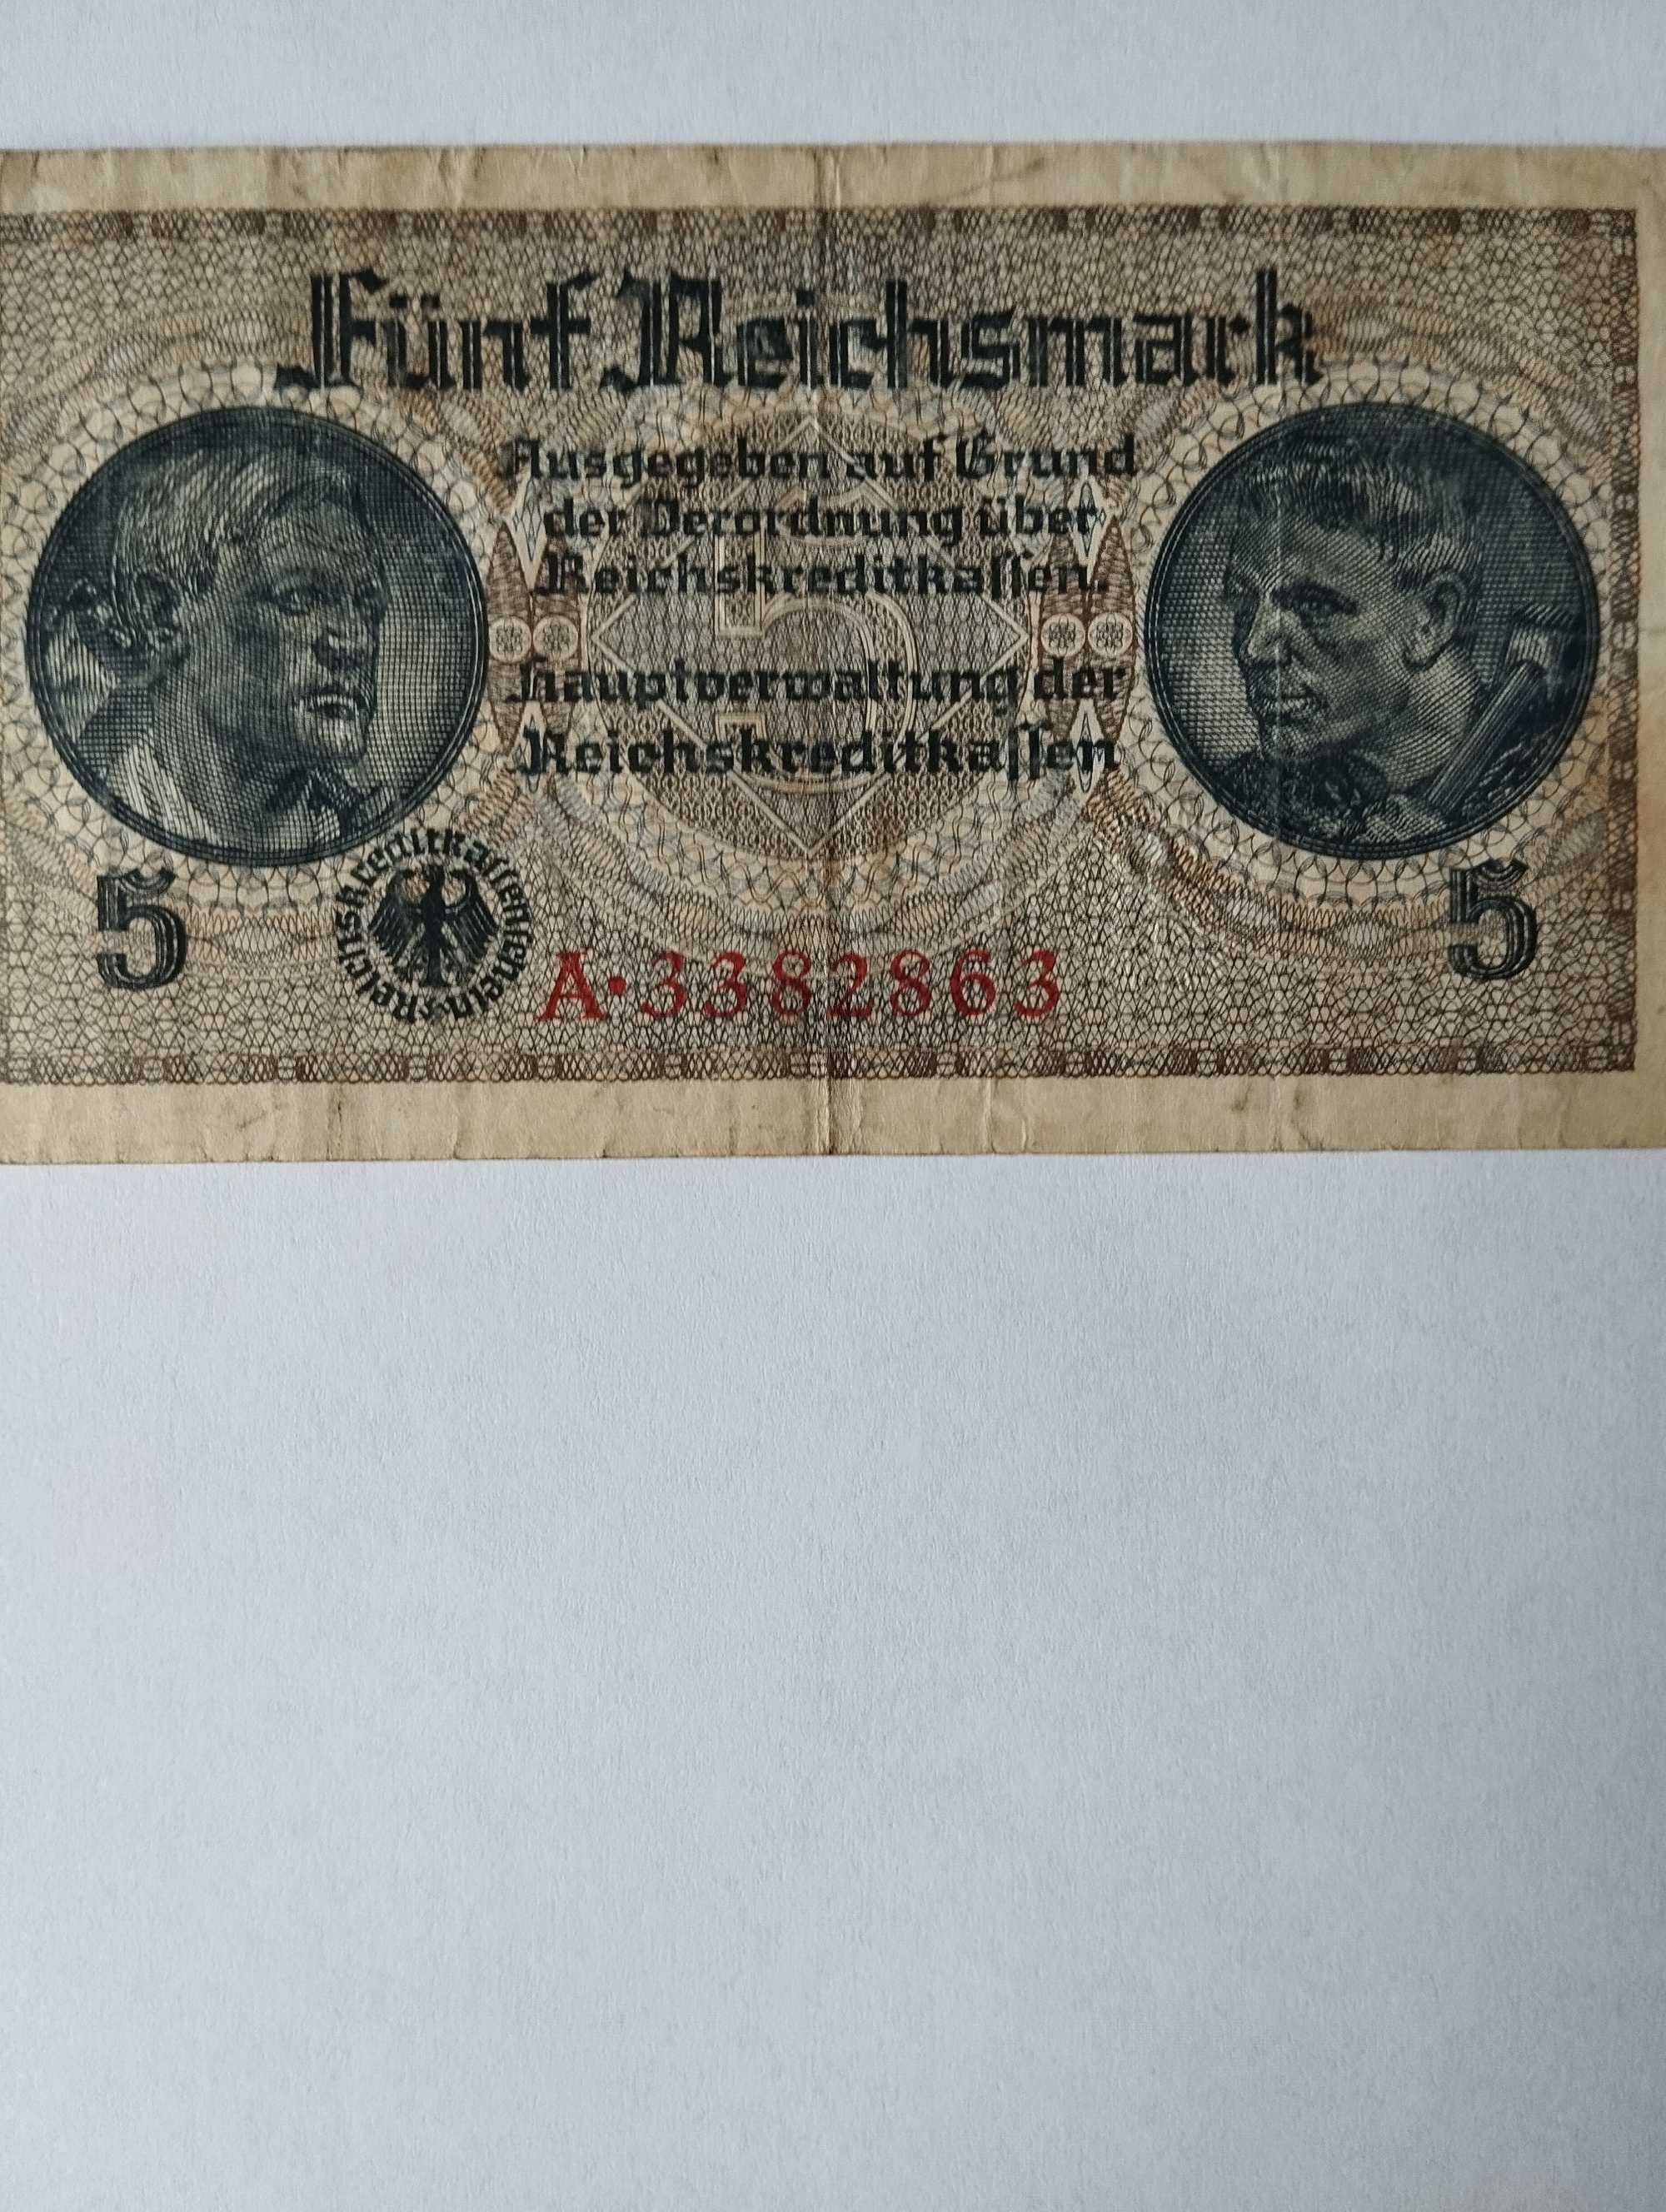 Банкноты 5 рейхсмарок,1940-1945гг